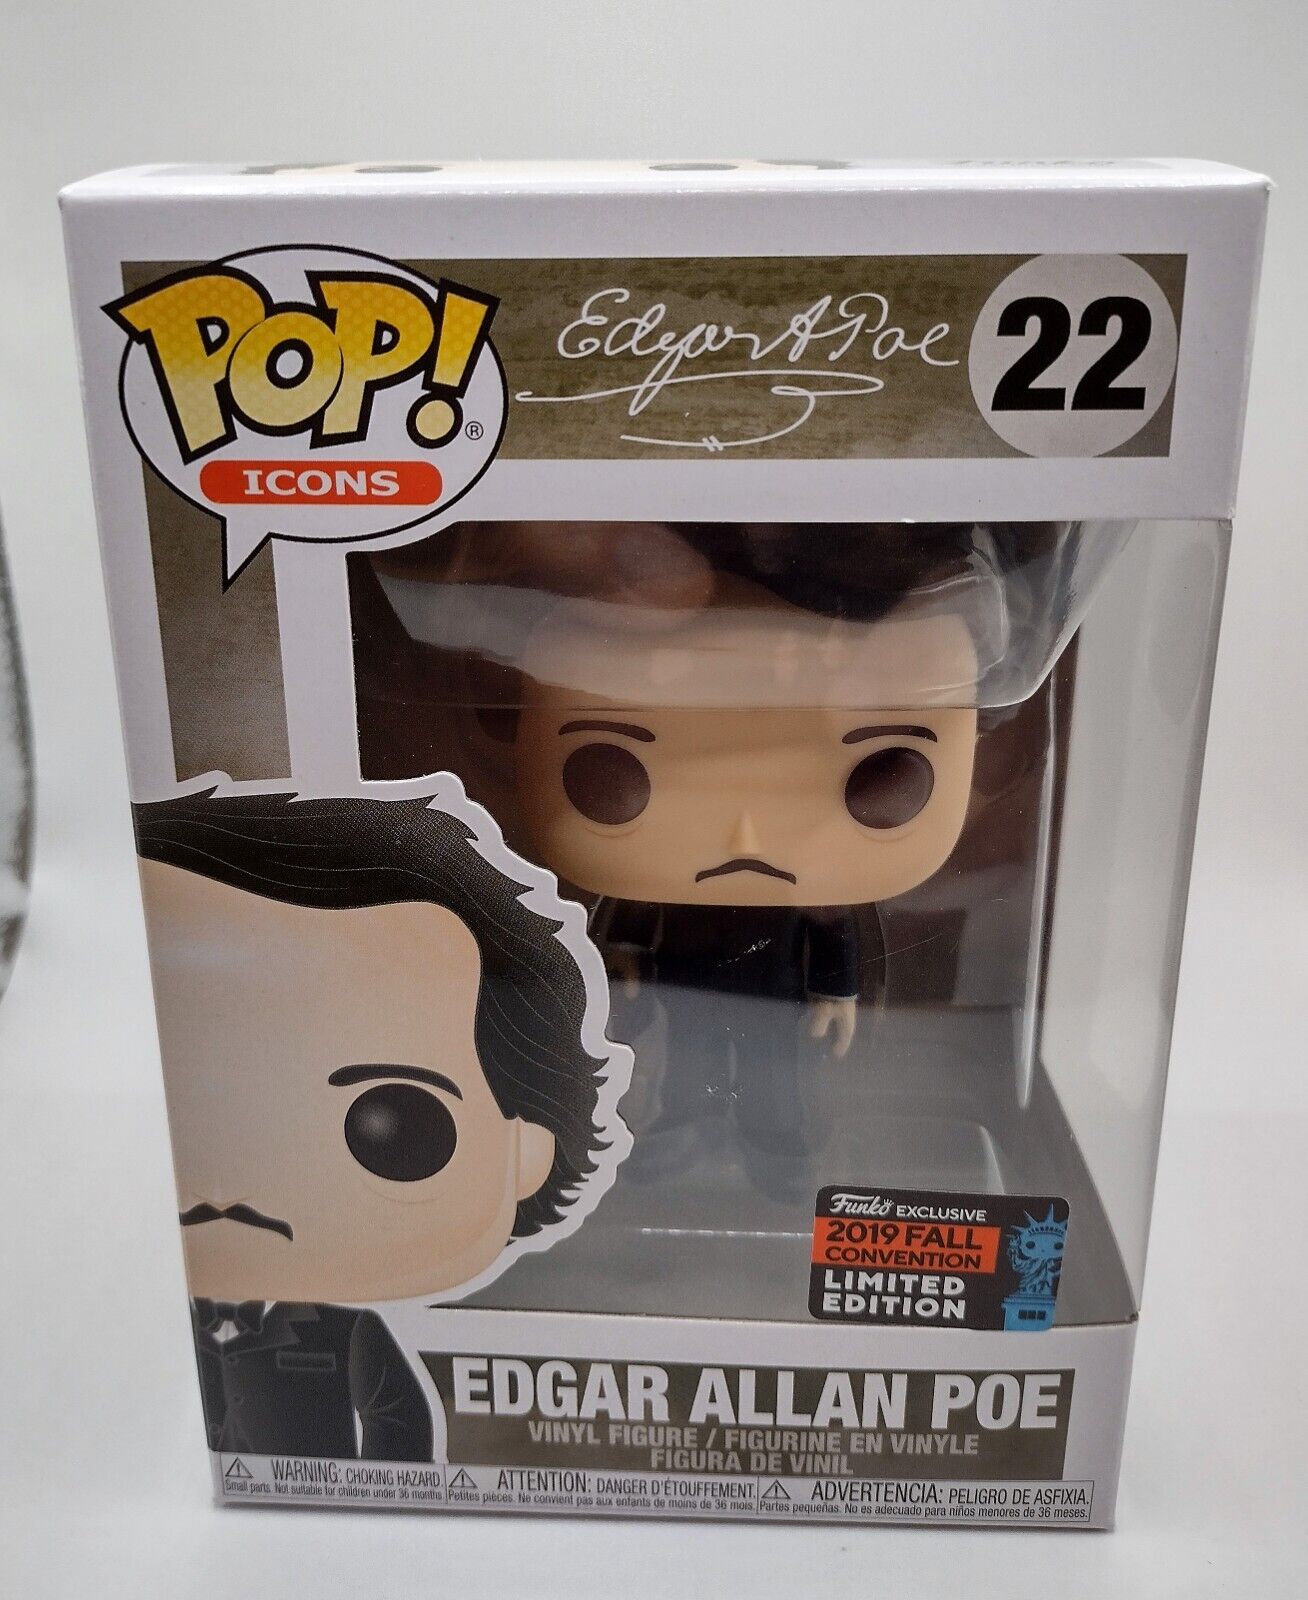 Funko Pop Edgar Allan Poe #22 Icons 2019 Fall Convention Exclusive